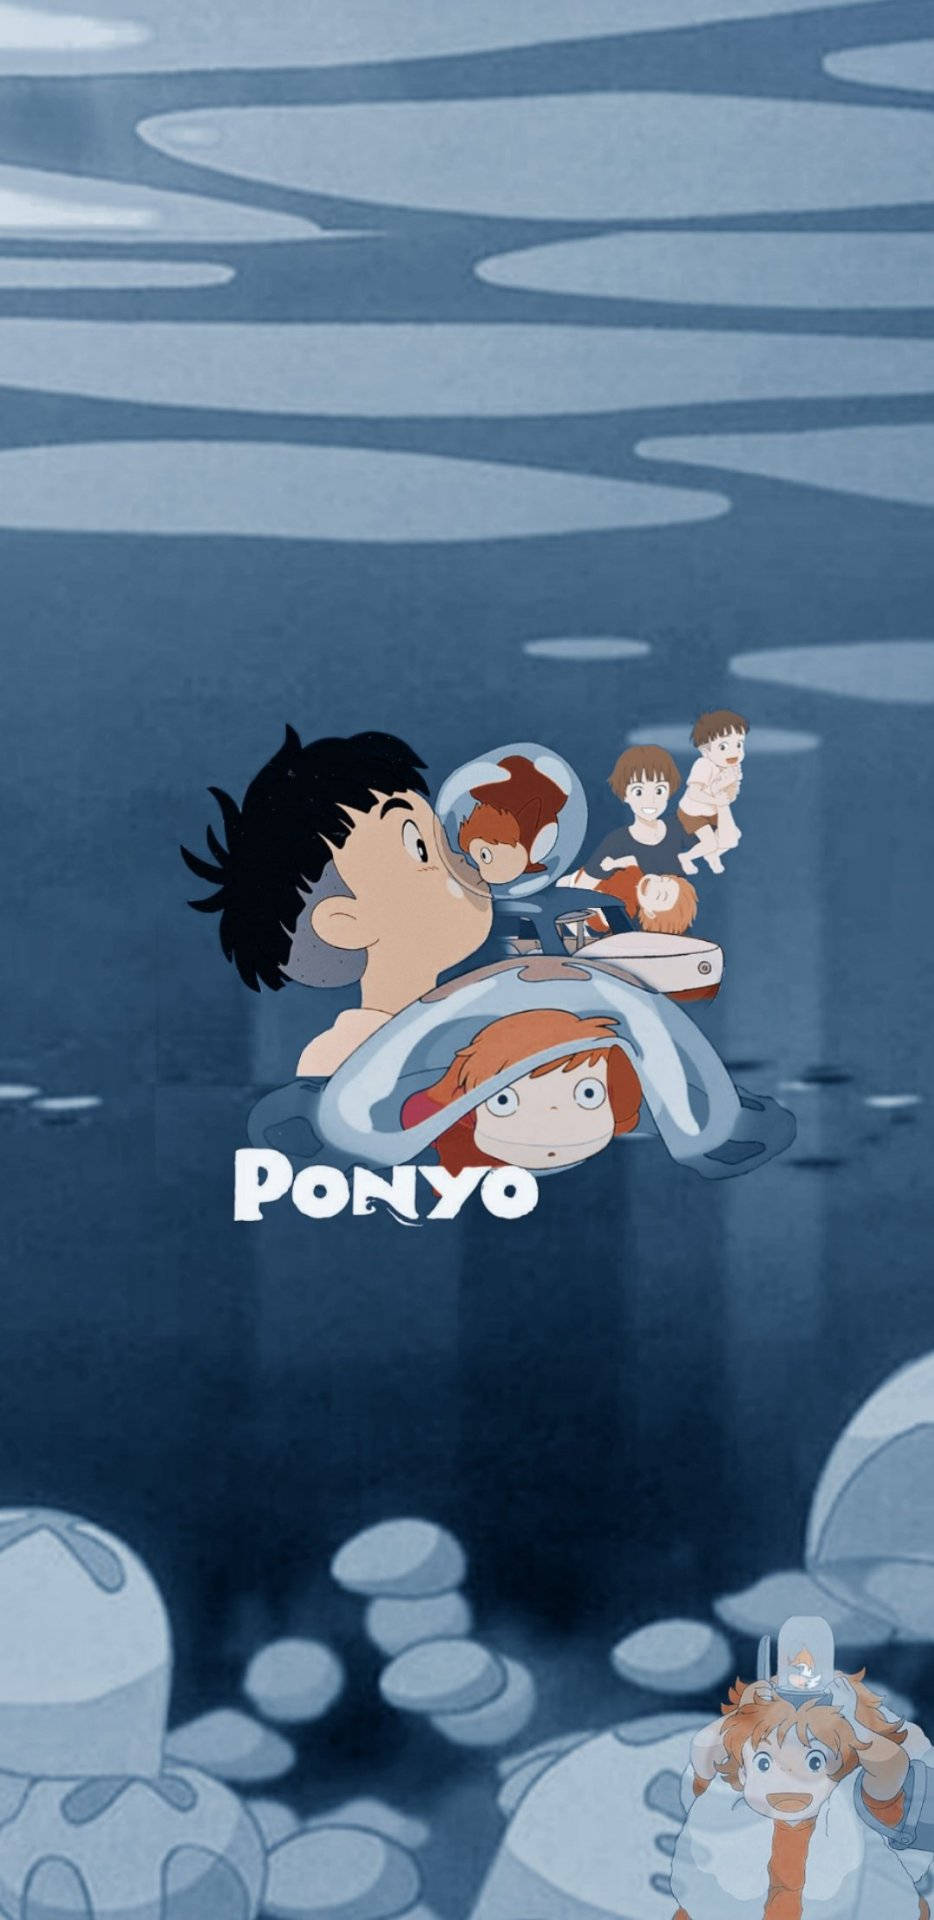 A Mystic Night With Ponyo